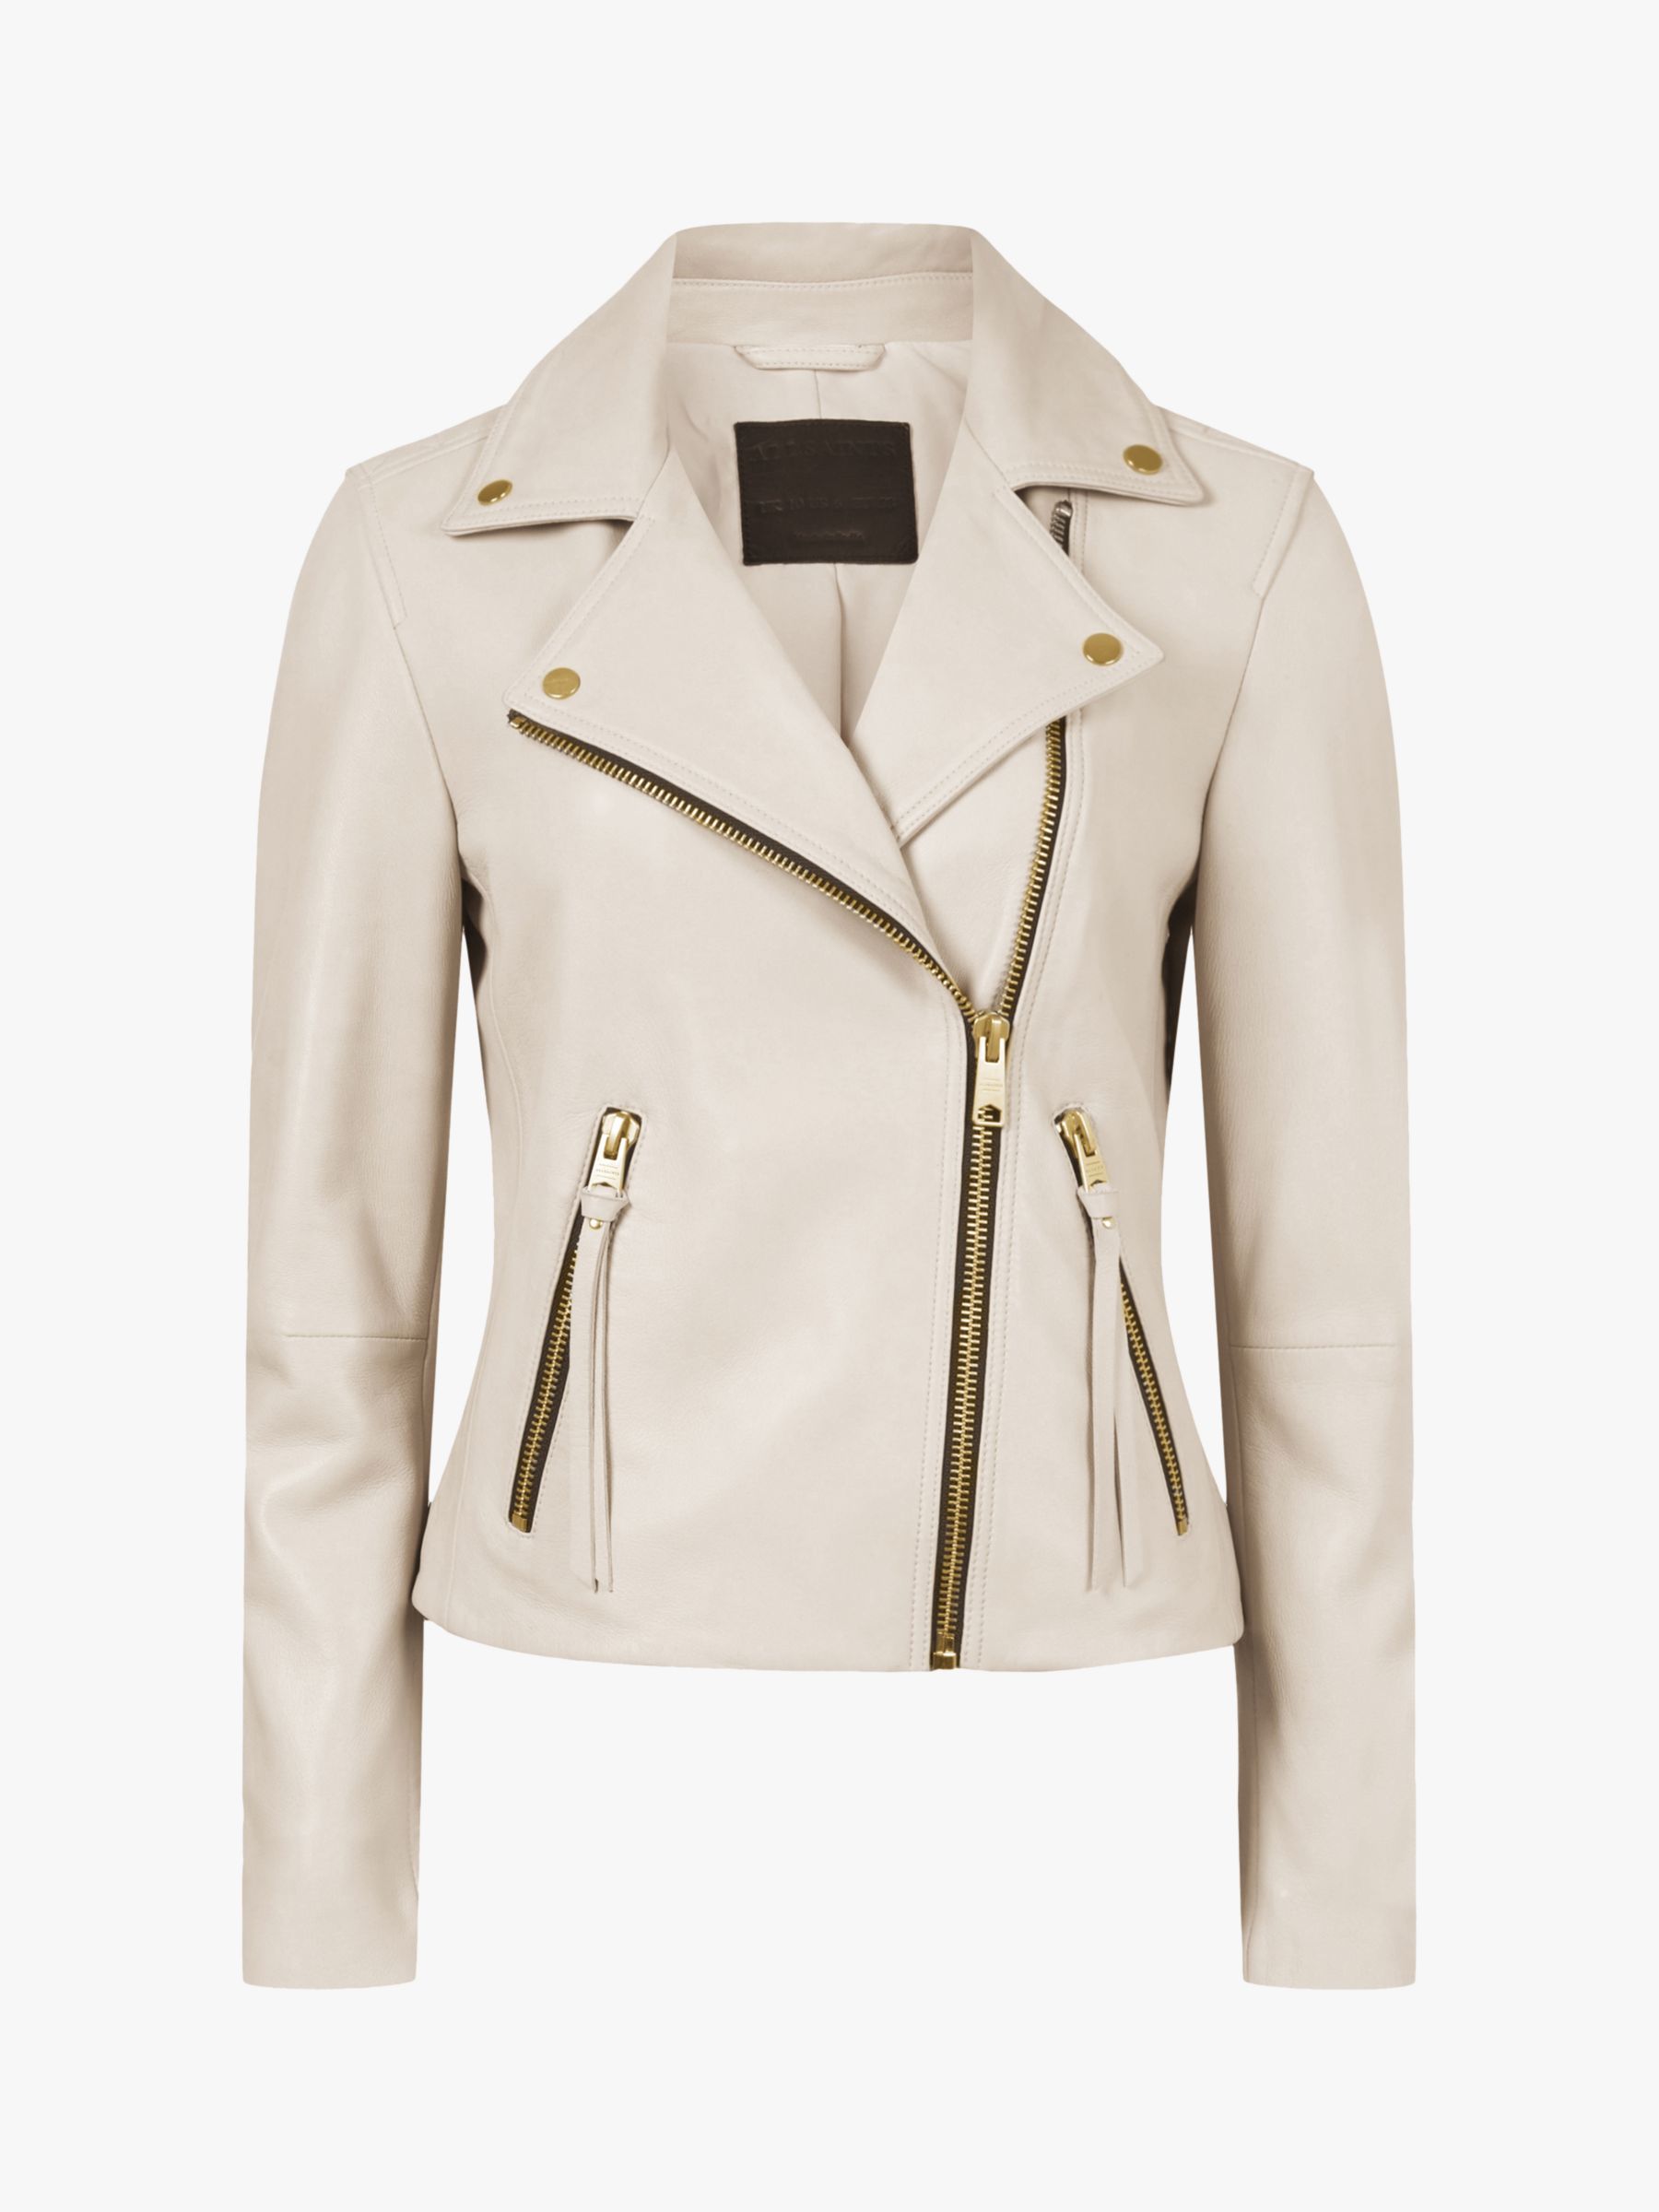 AllSaints Dalby Leather Biker Jacket, Ivory White at John Lewis & Partners